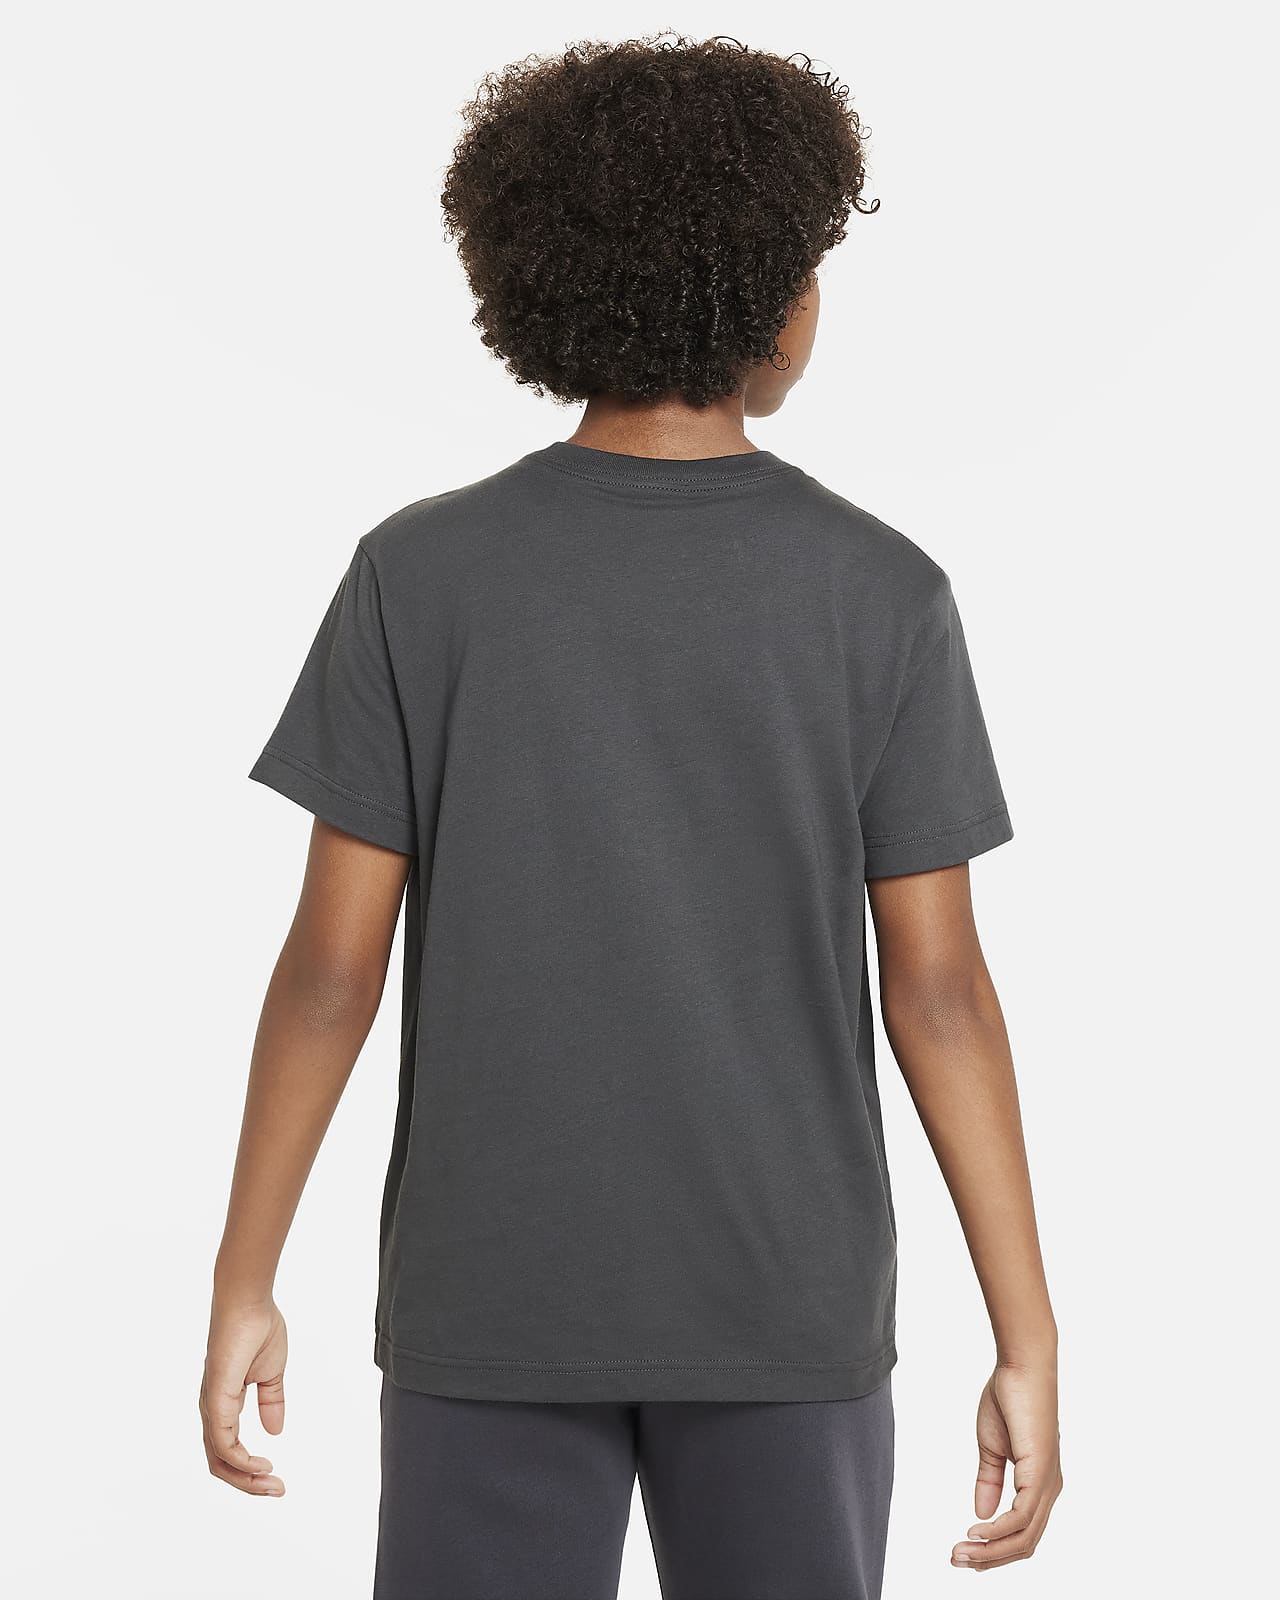 Nike sportswear big kids' (girls') t-shirt